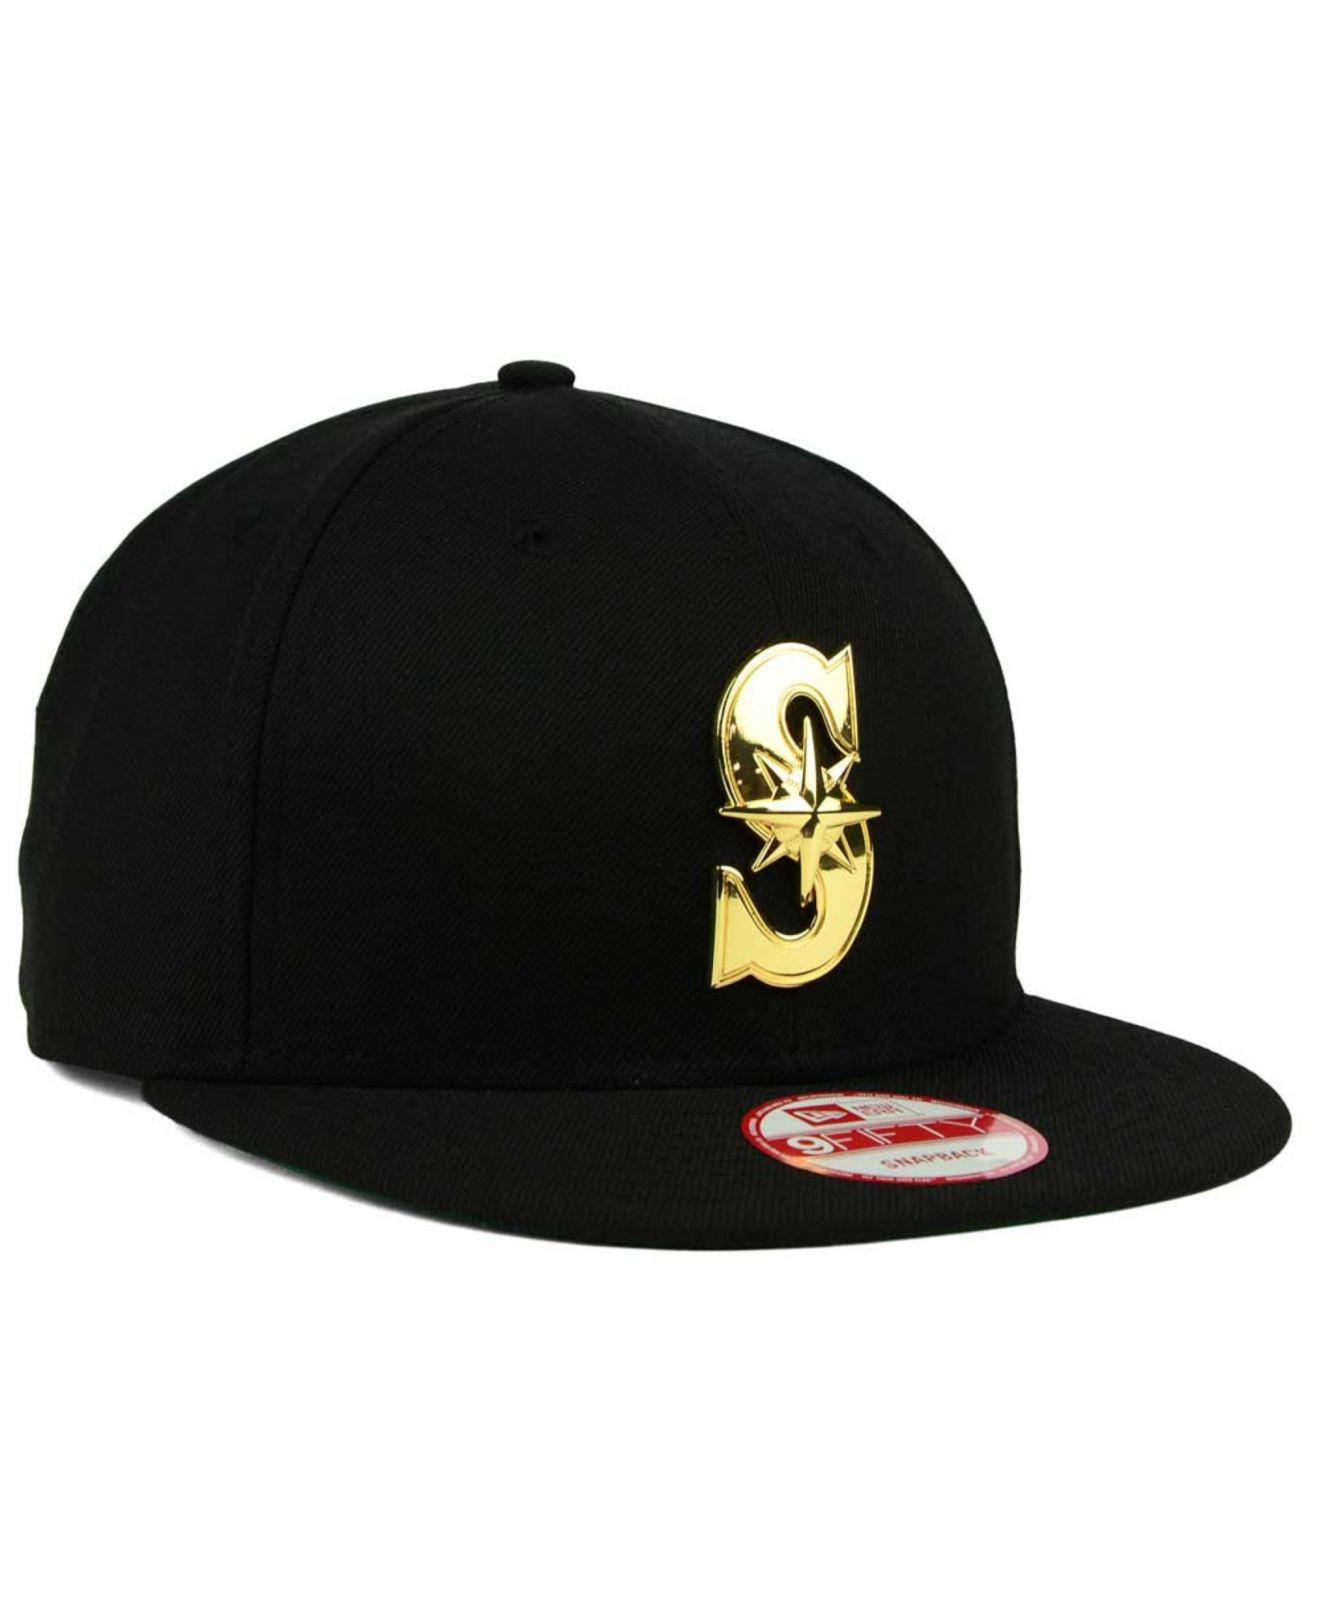 Lyst - Ktz Seattle Mariners League O'gold 9fifty Snapback Cap in Black ...